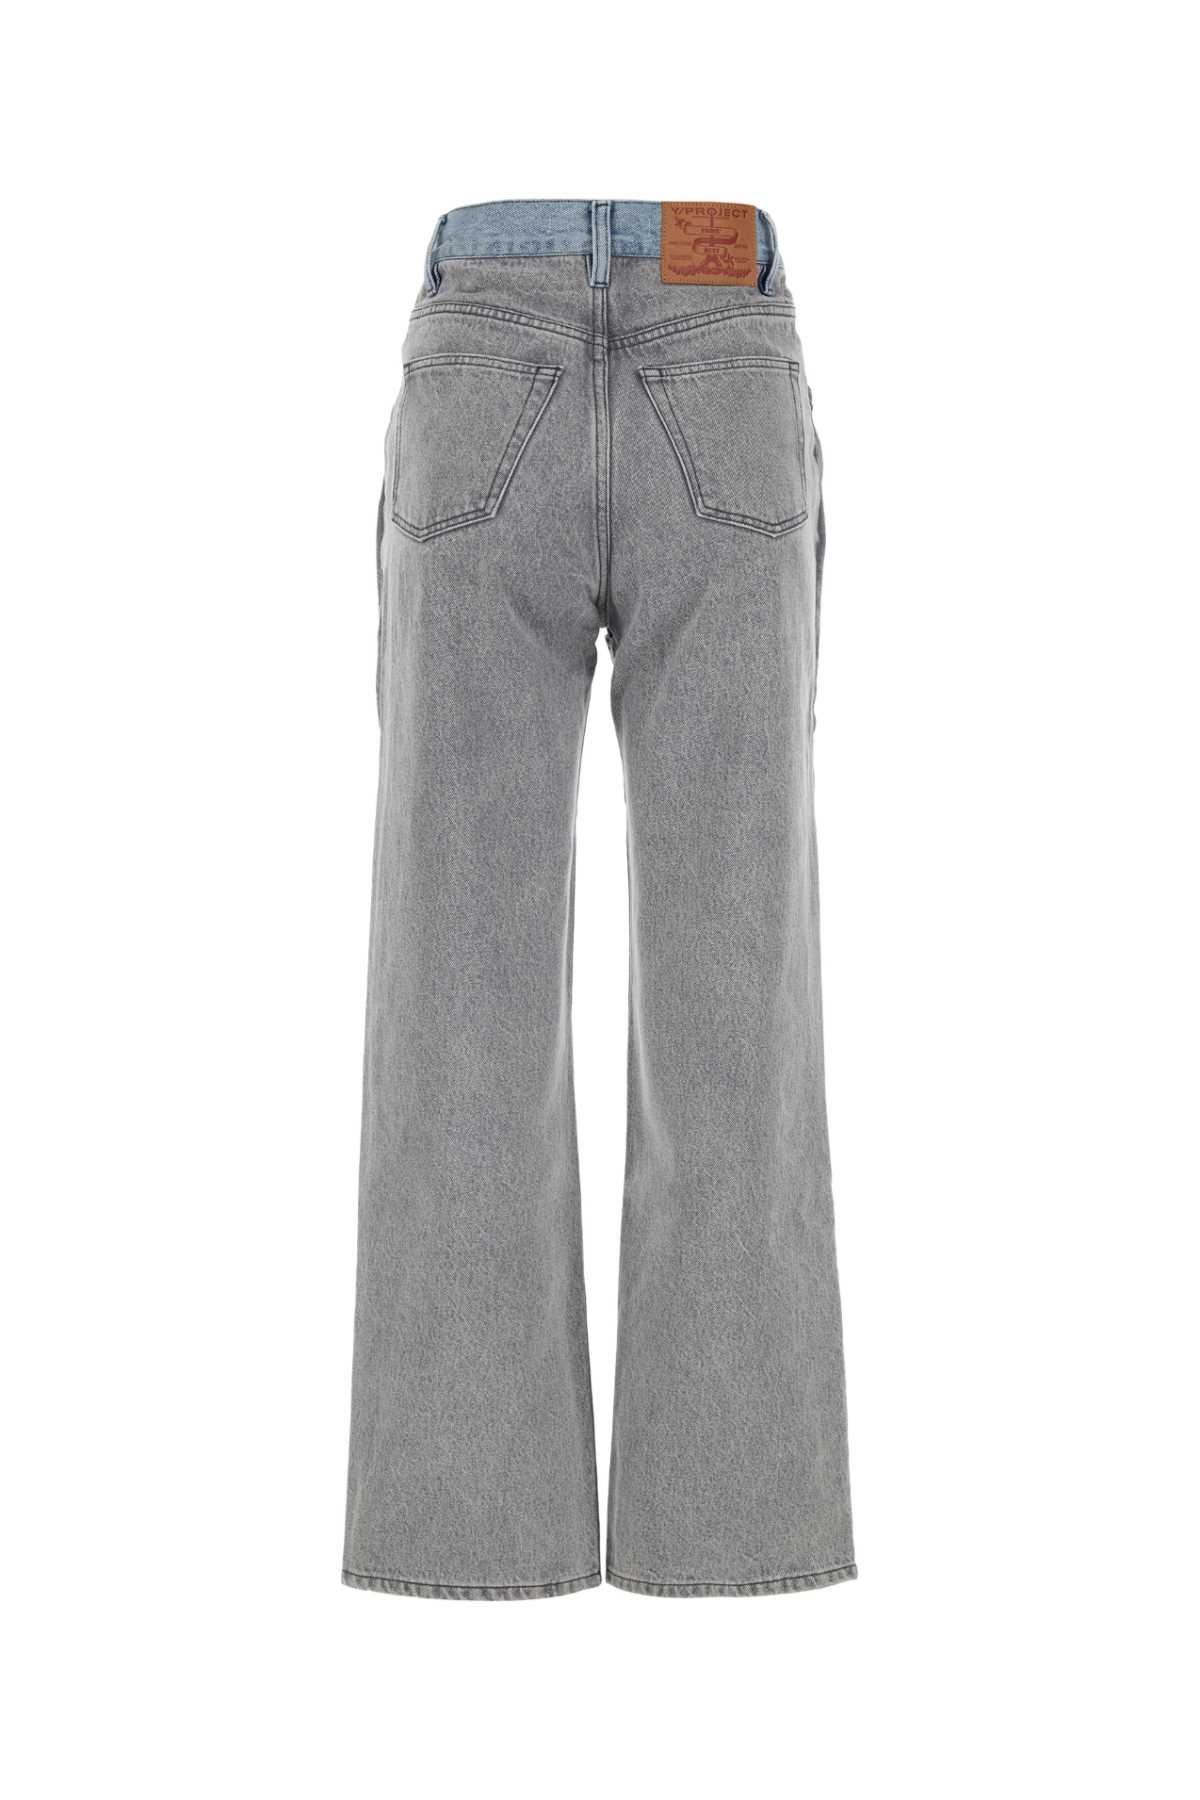 Y/project Grey Denim Jeans In Ice Blue/ Grey